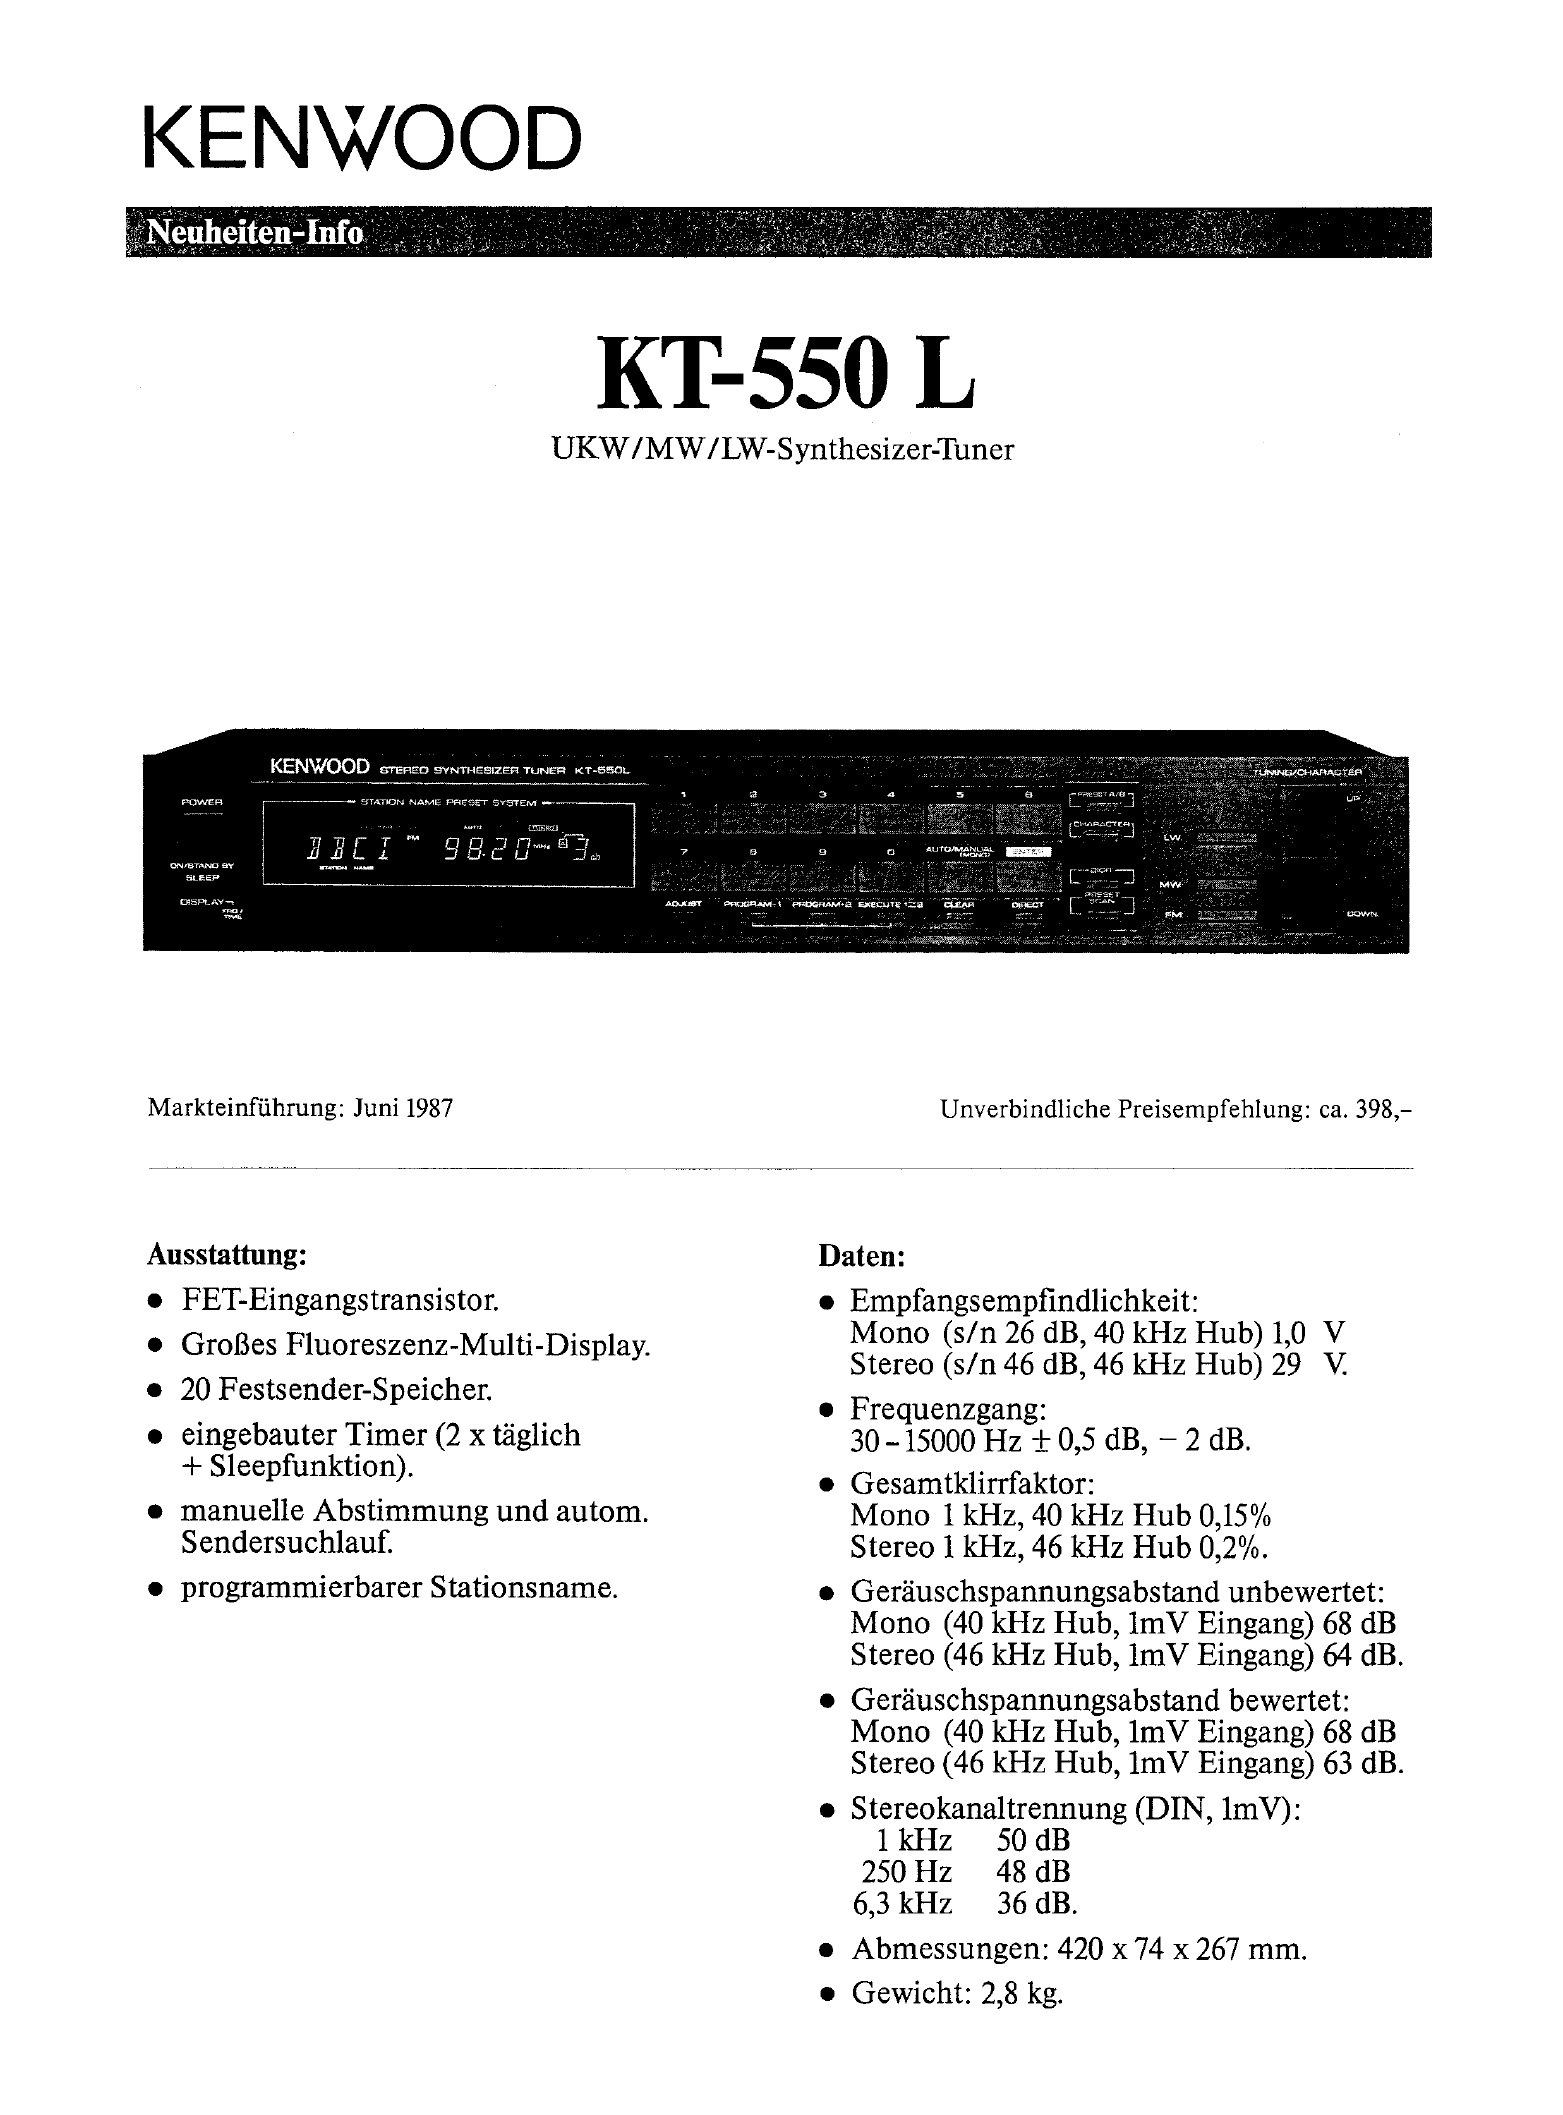 Kenwood KT-550 L-Prospekt-1987.jpg